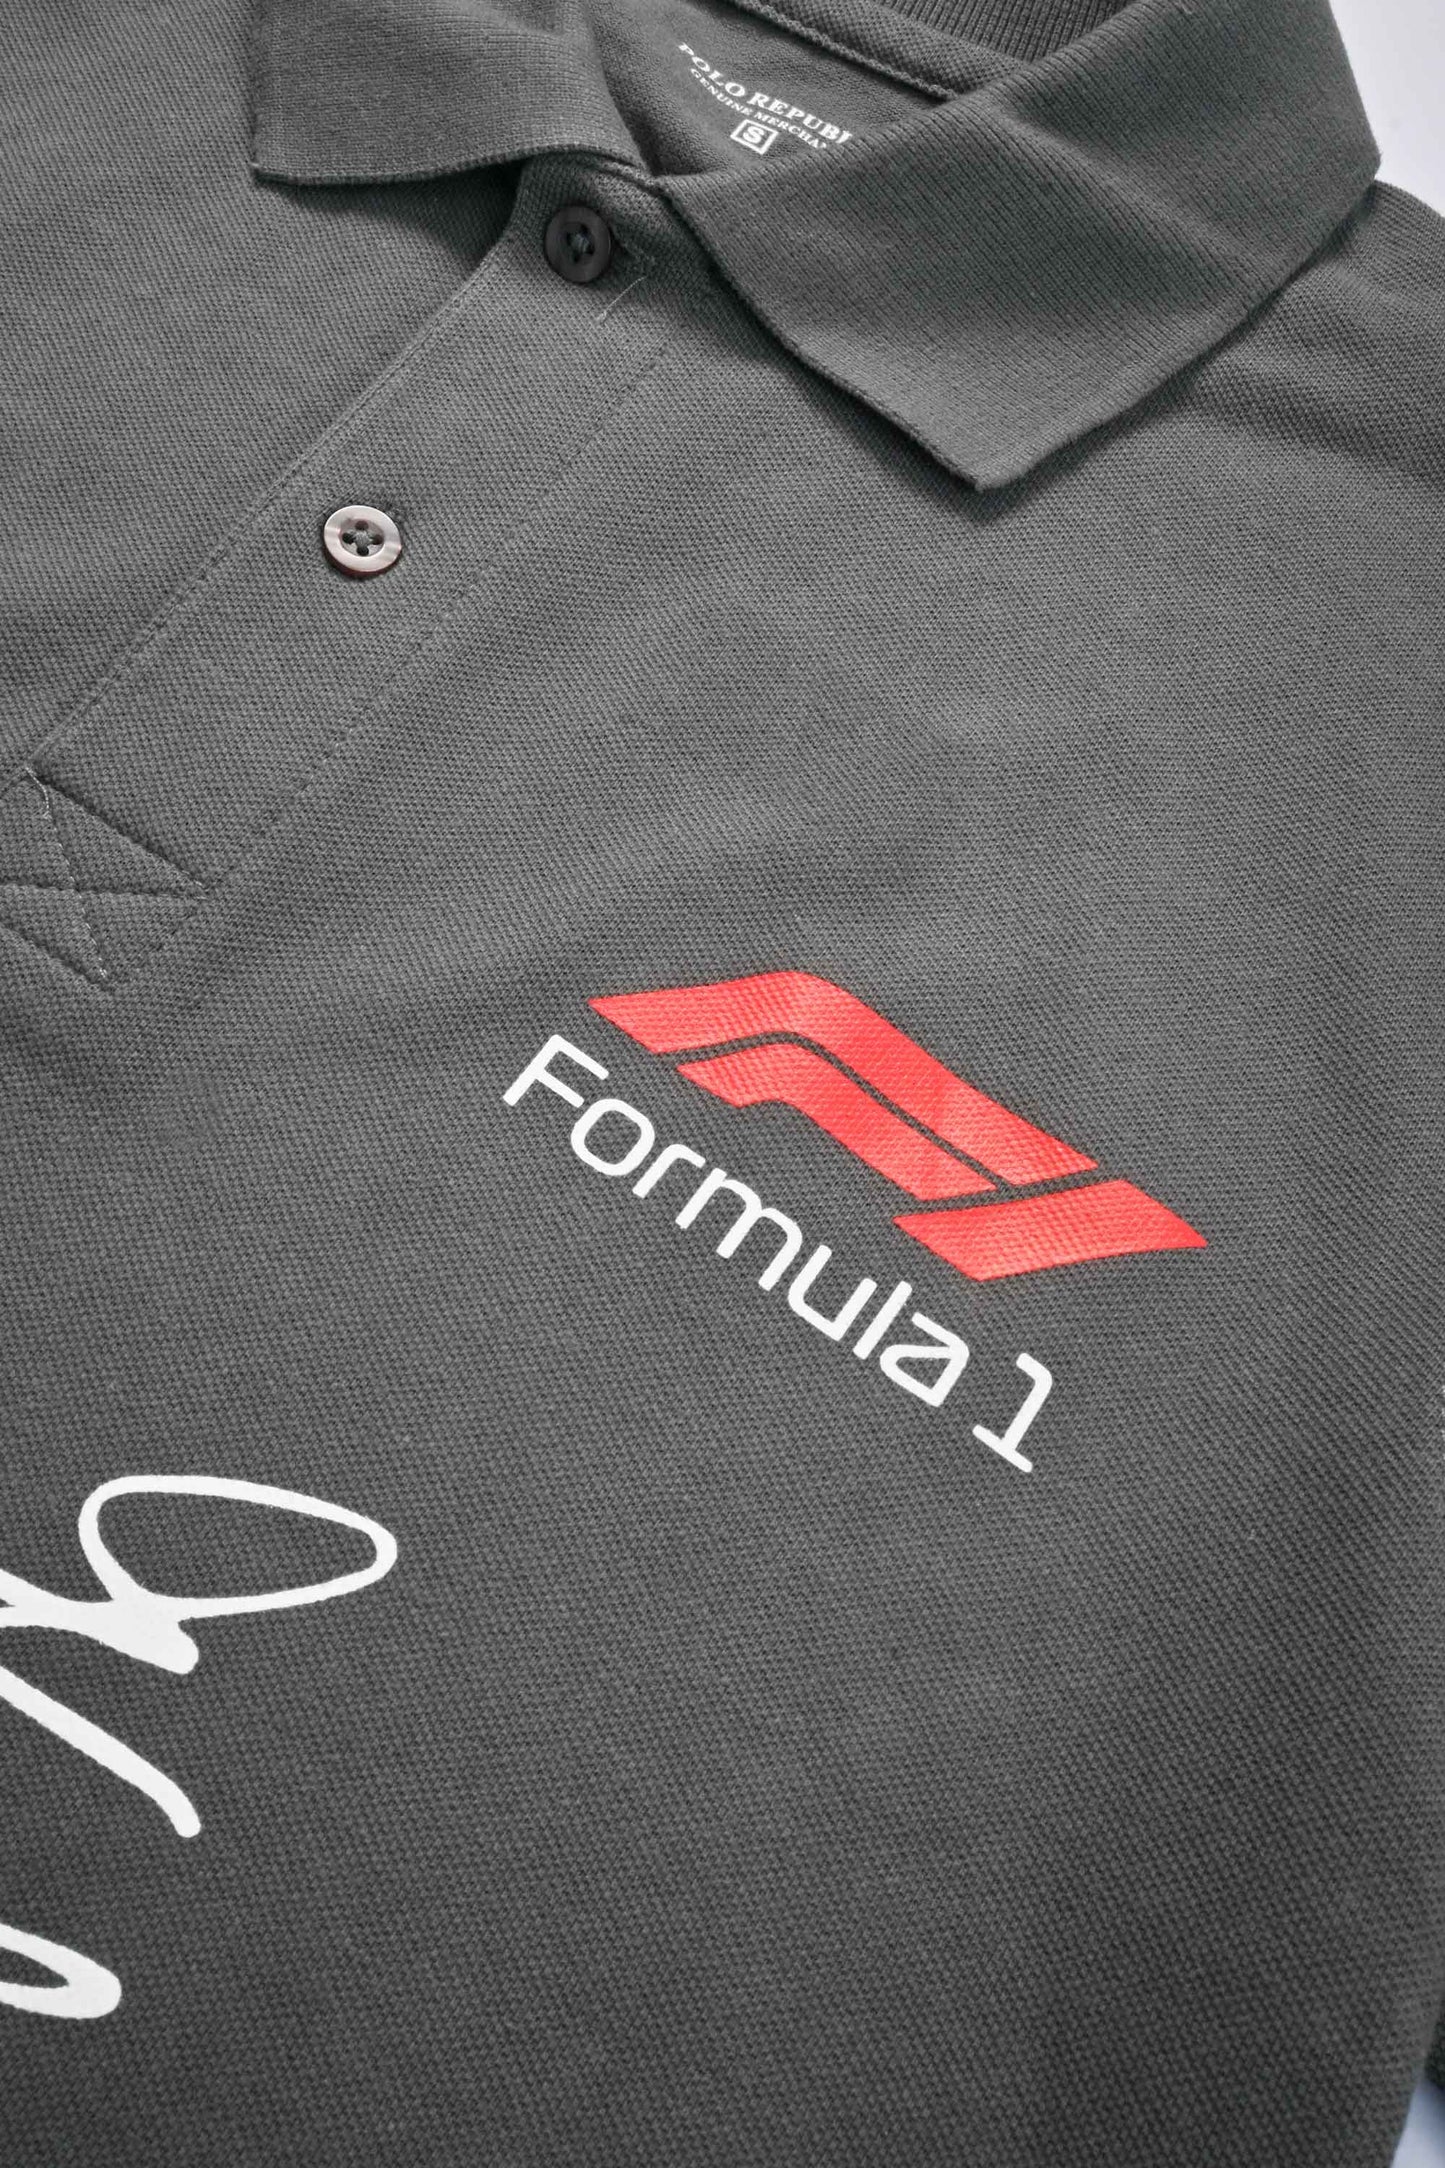 Polo Republica Men's PakWheels Formula 1 Printed Short Sleeve Polo Shirt